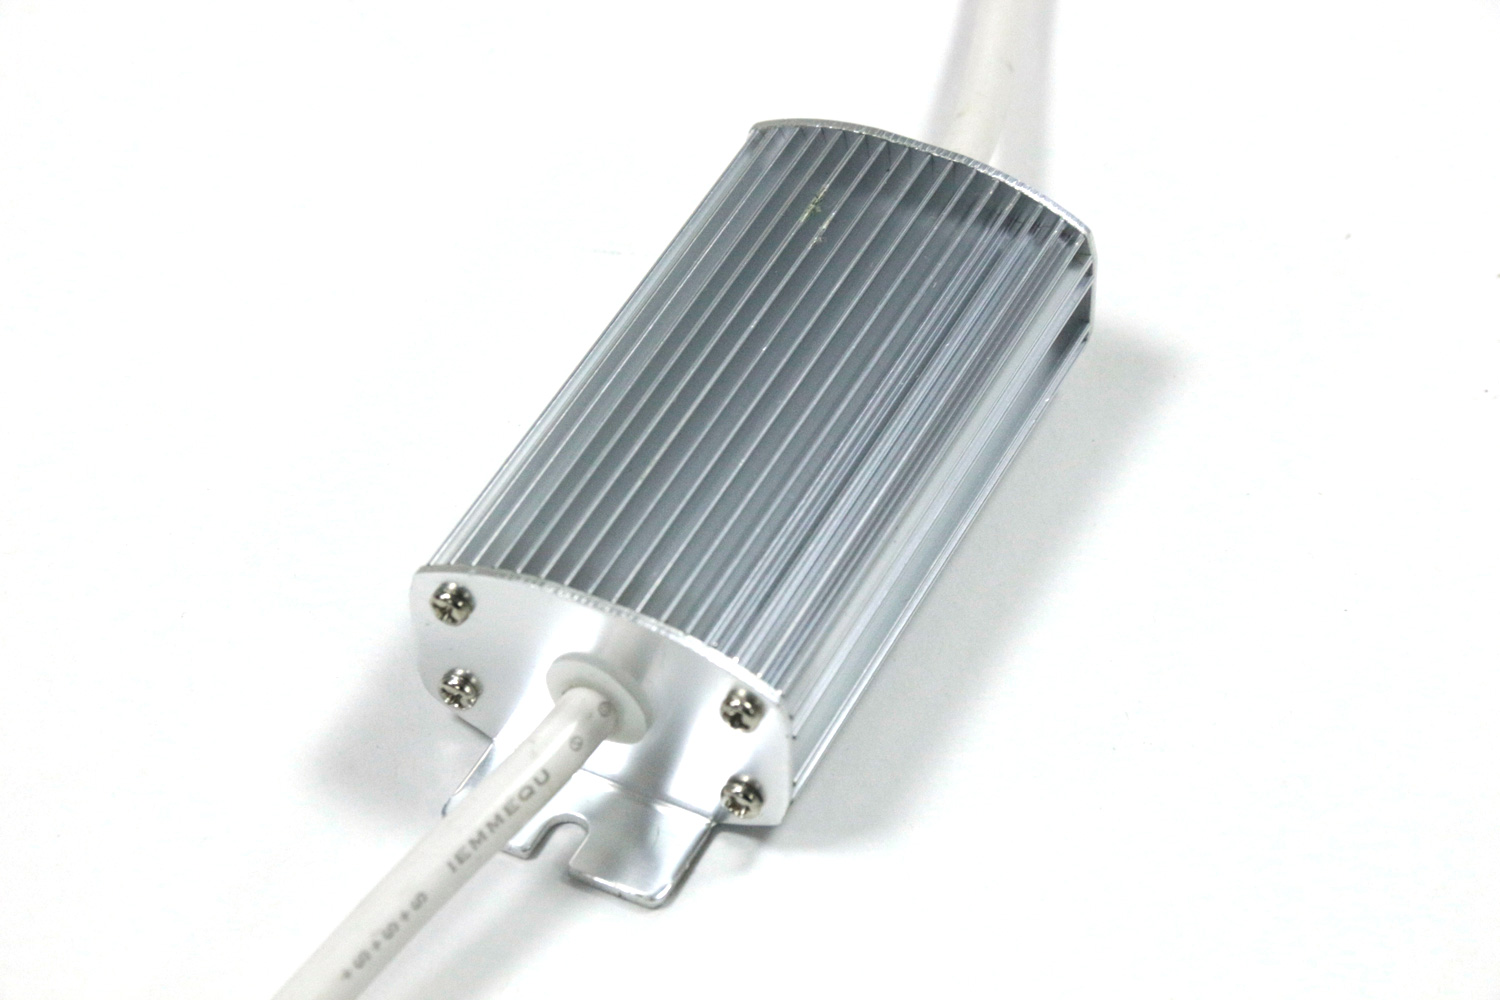 MG 7686 - مصابيح شريطية LED ذات جهد عالي لشهادة ETL